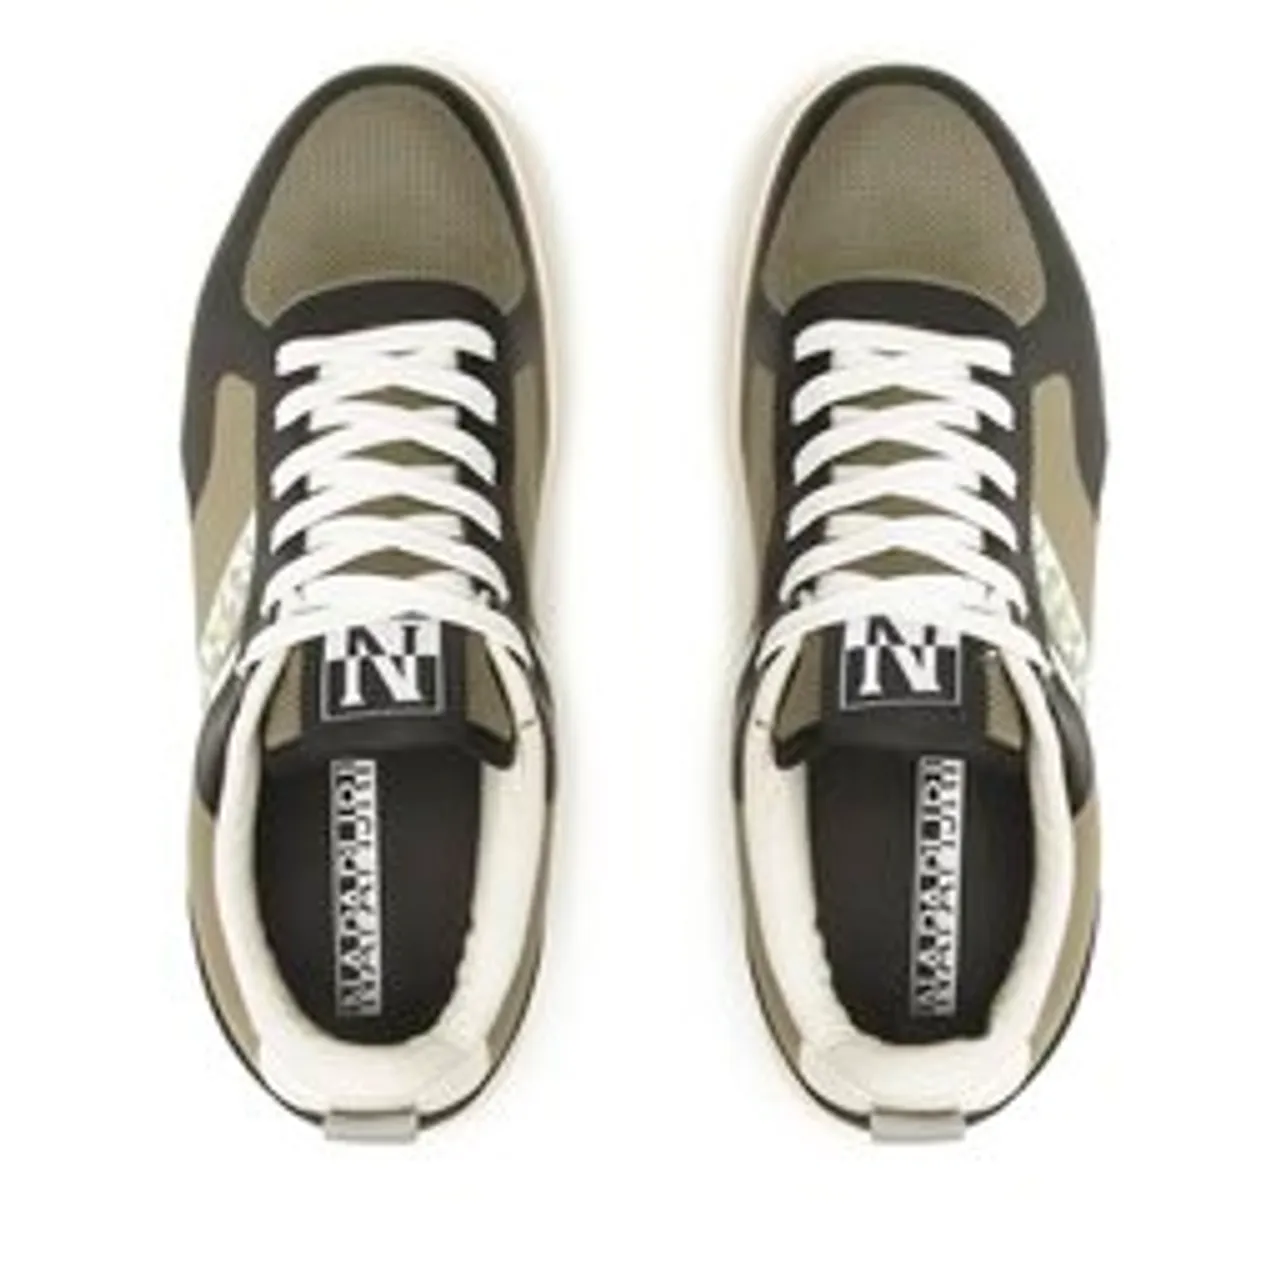 Sneakers Napapijri NP0A4HKR Green/Black/White G1P